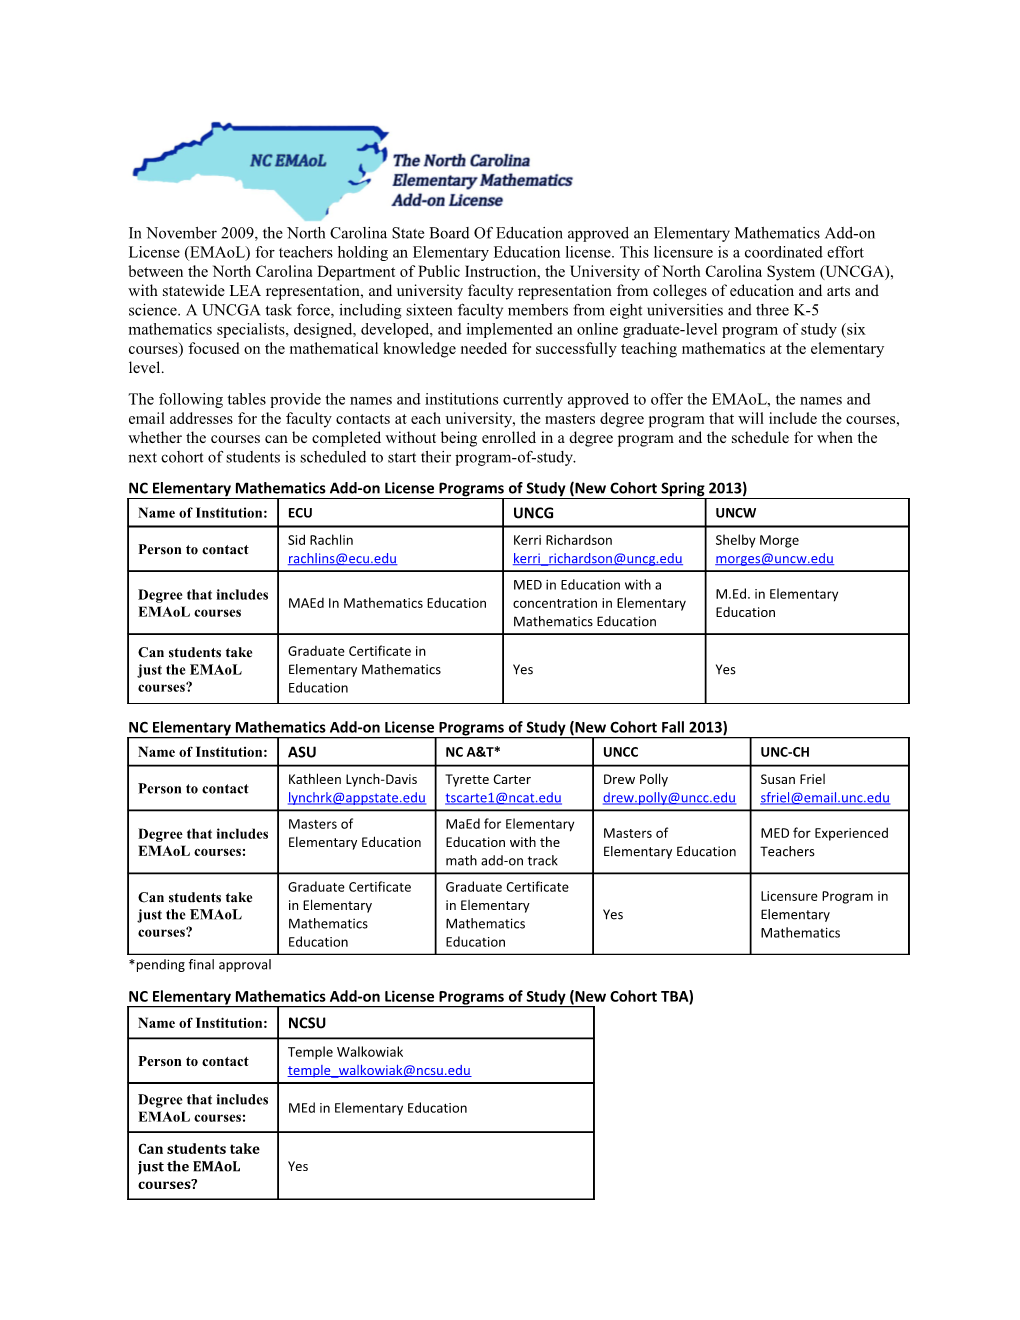 NC Elementary Mathematics Add-On License Programs of Study (New Cohort Spring 2013)